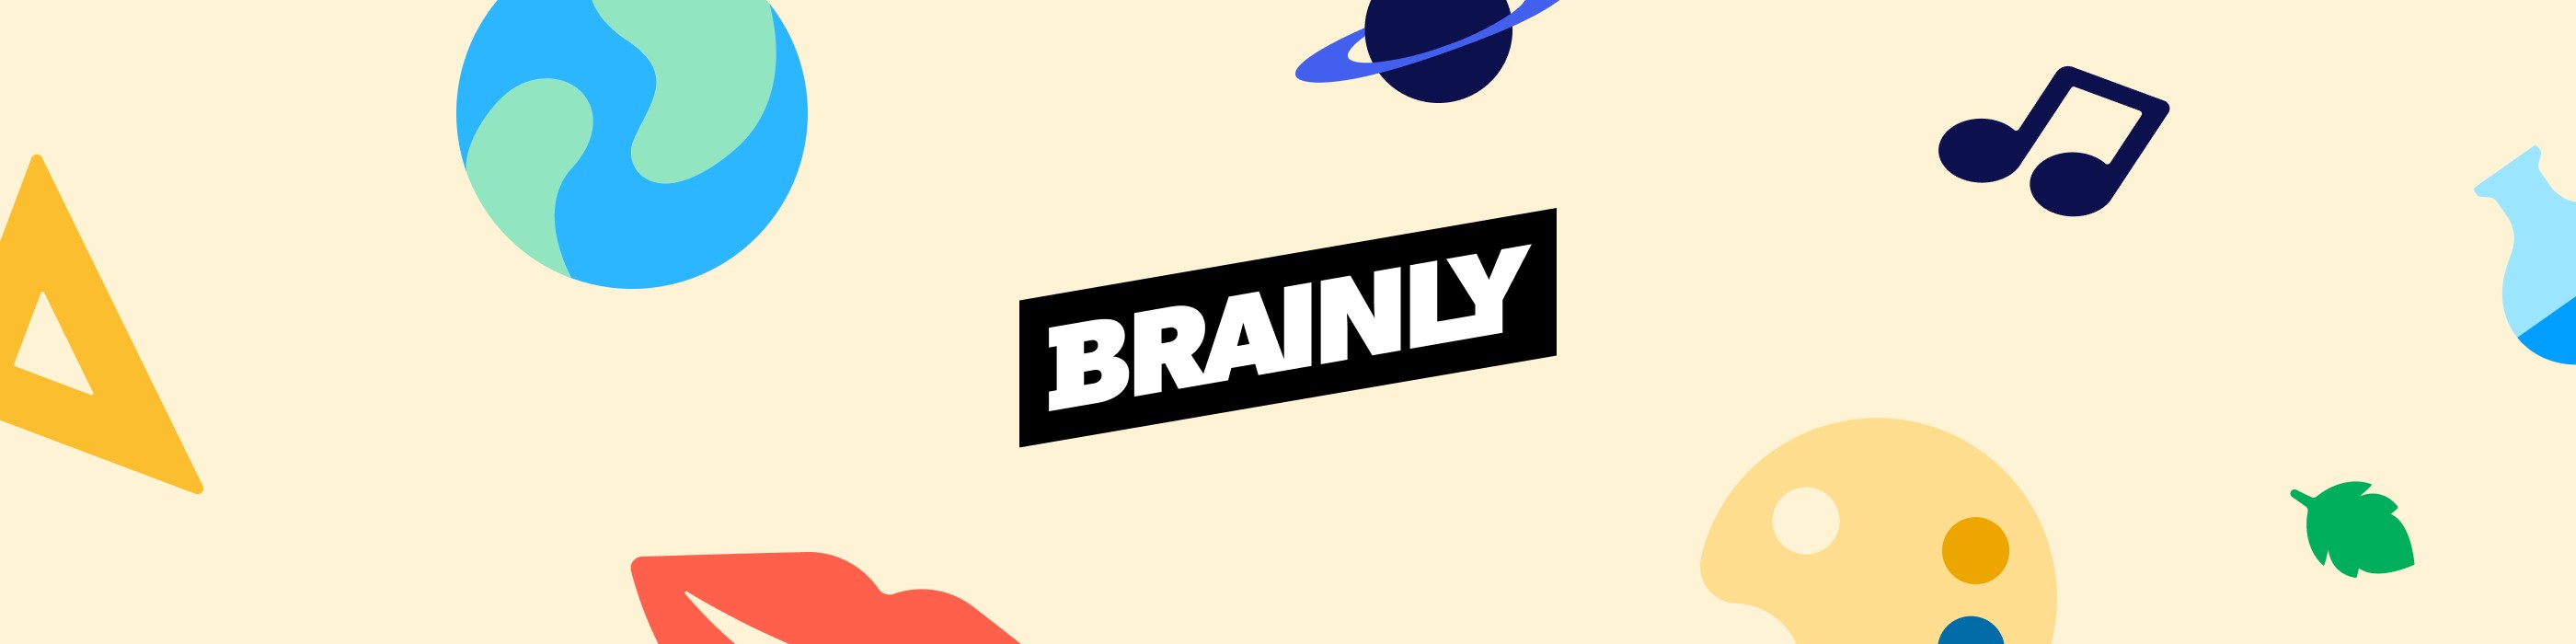 Brainly | LinkedIn